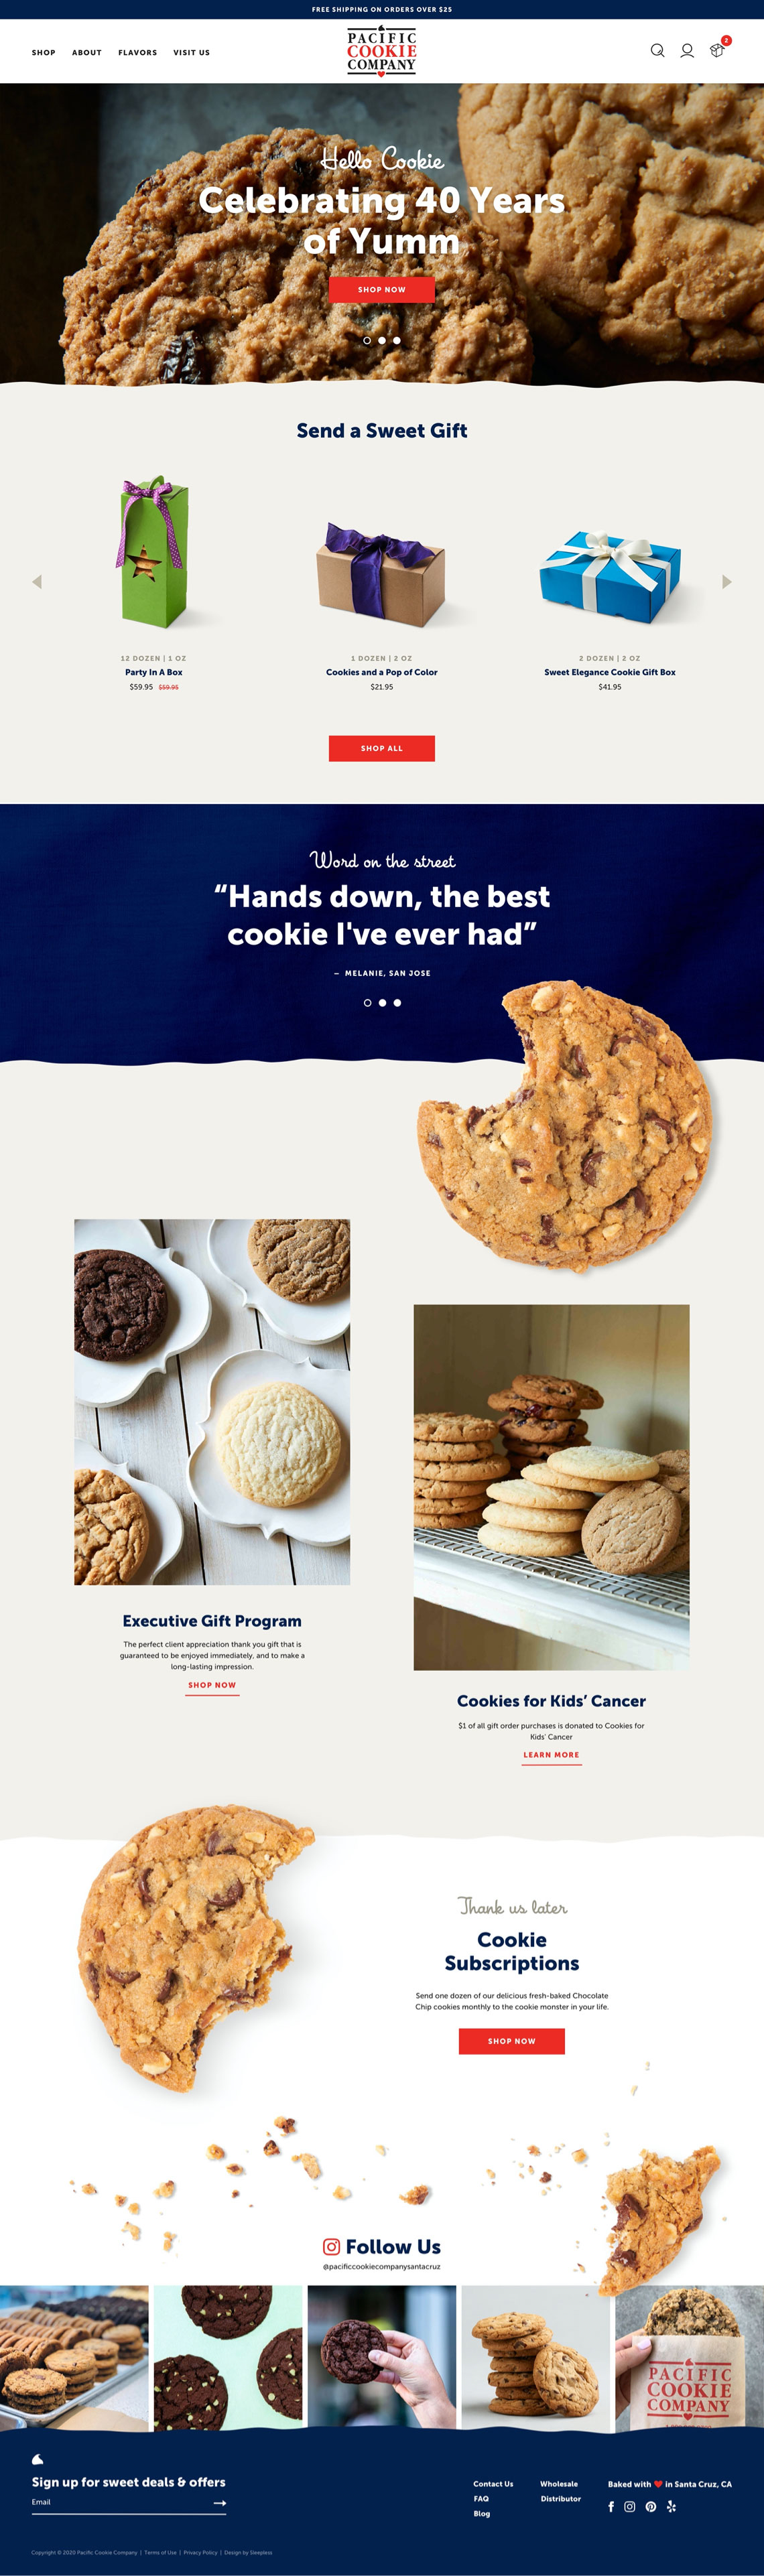 Pacific Cookie Company Homepage